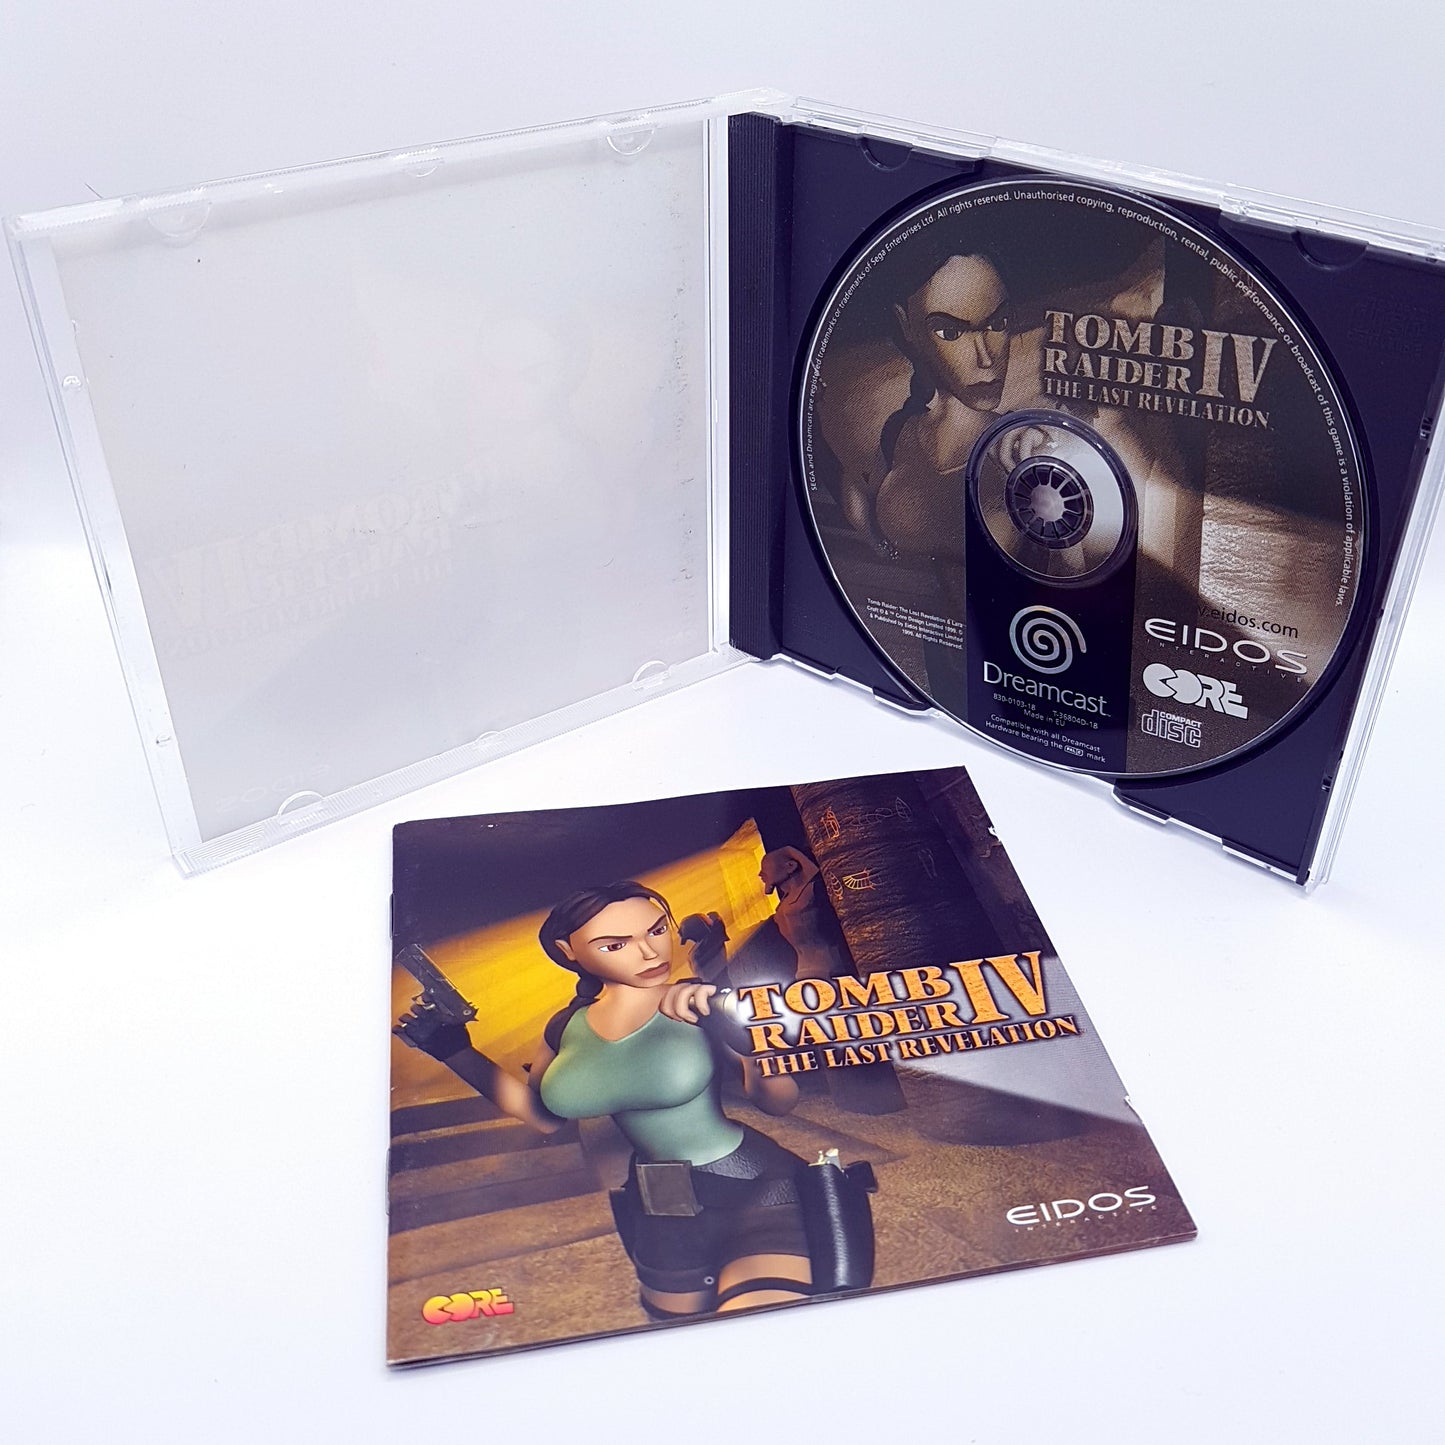 Dreamcast - Tomb Raider IV - The Last Revelation - komplett - gebraucht